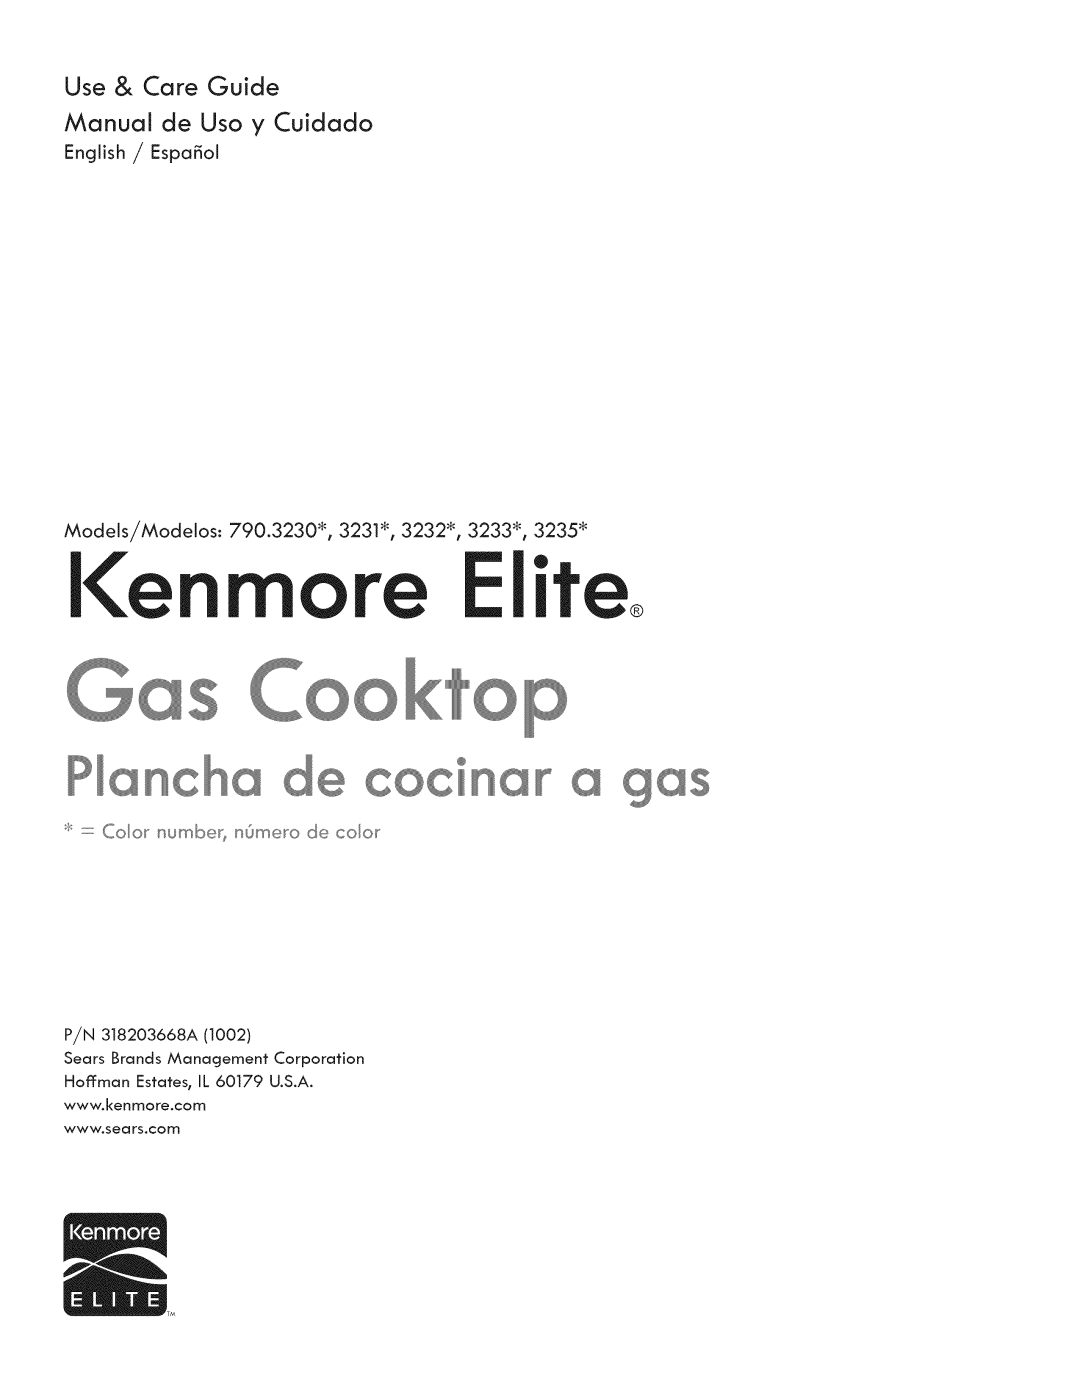 Kenmore 3233, 790.323, 3232, 3231, 3235 manual I e Elite, Use & Care Guide, Manual de Uso y Cuidado, English / Espa ol 